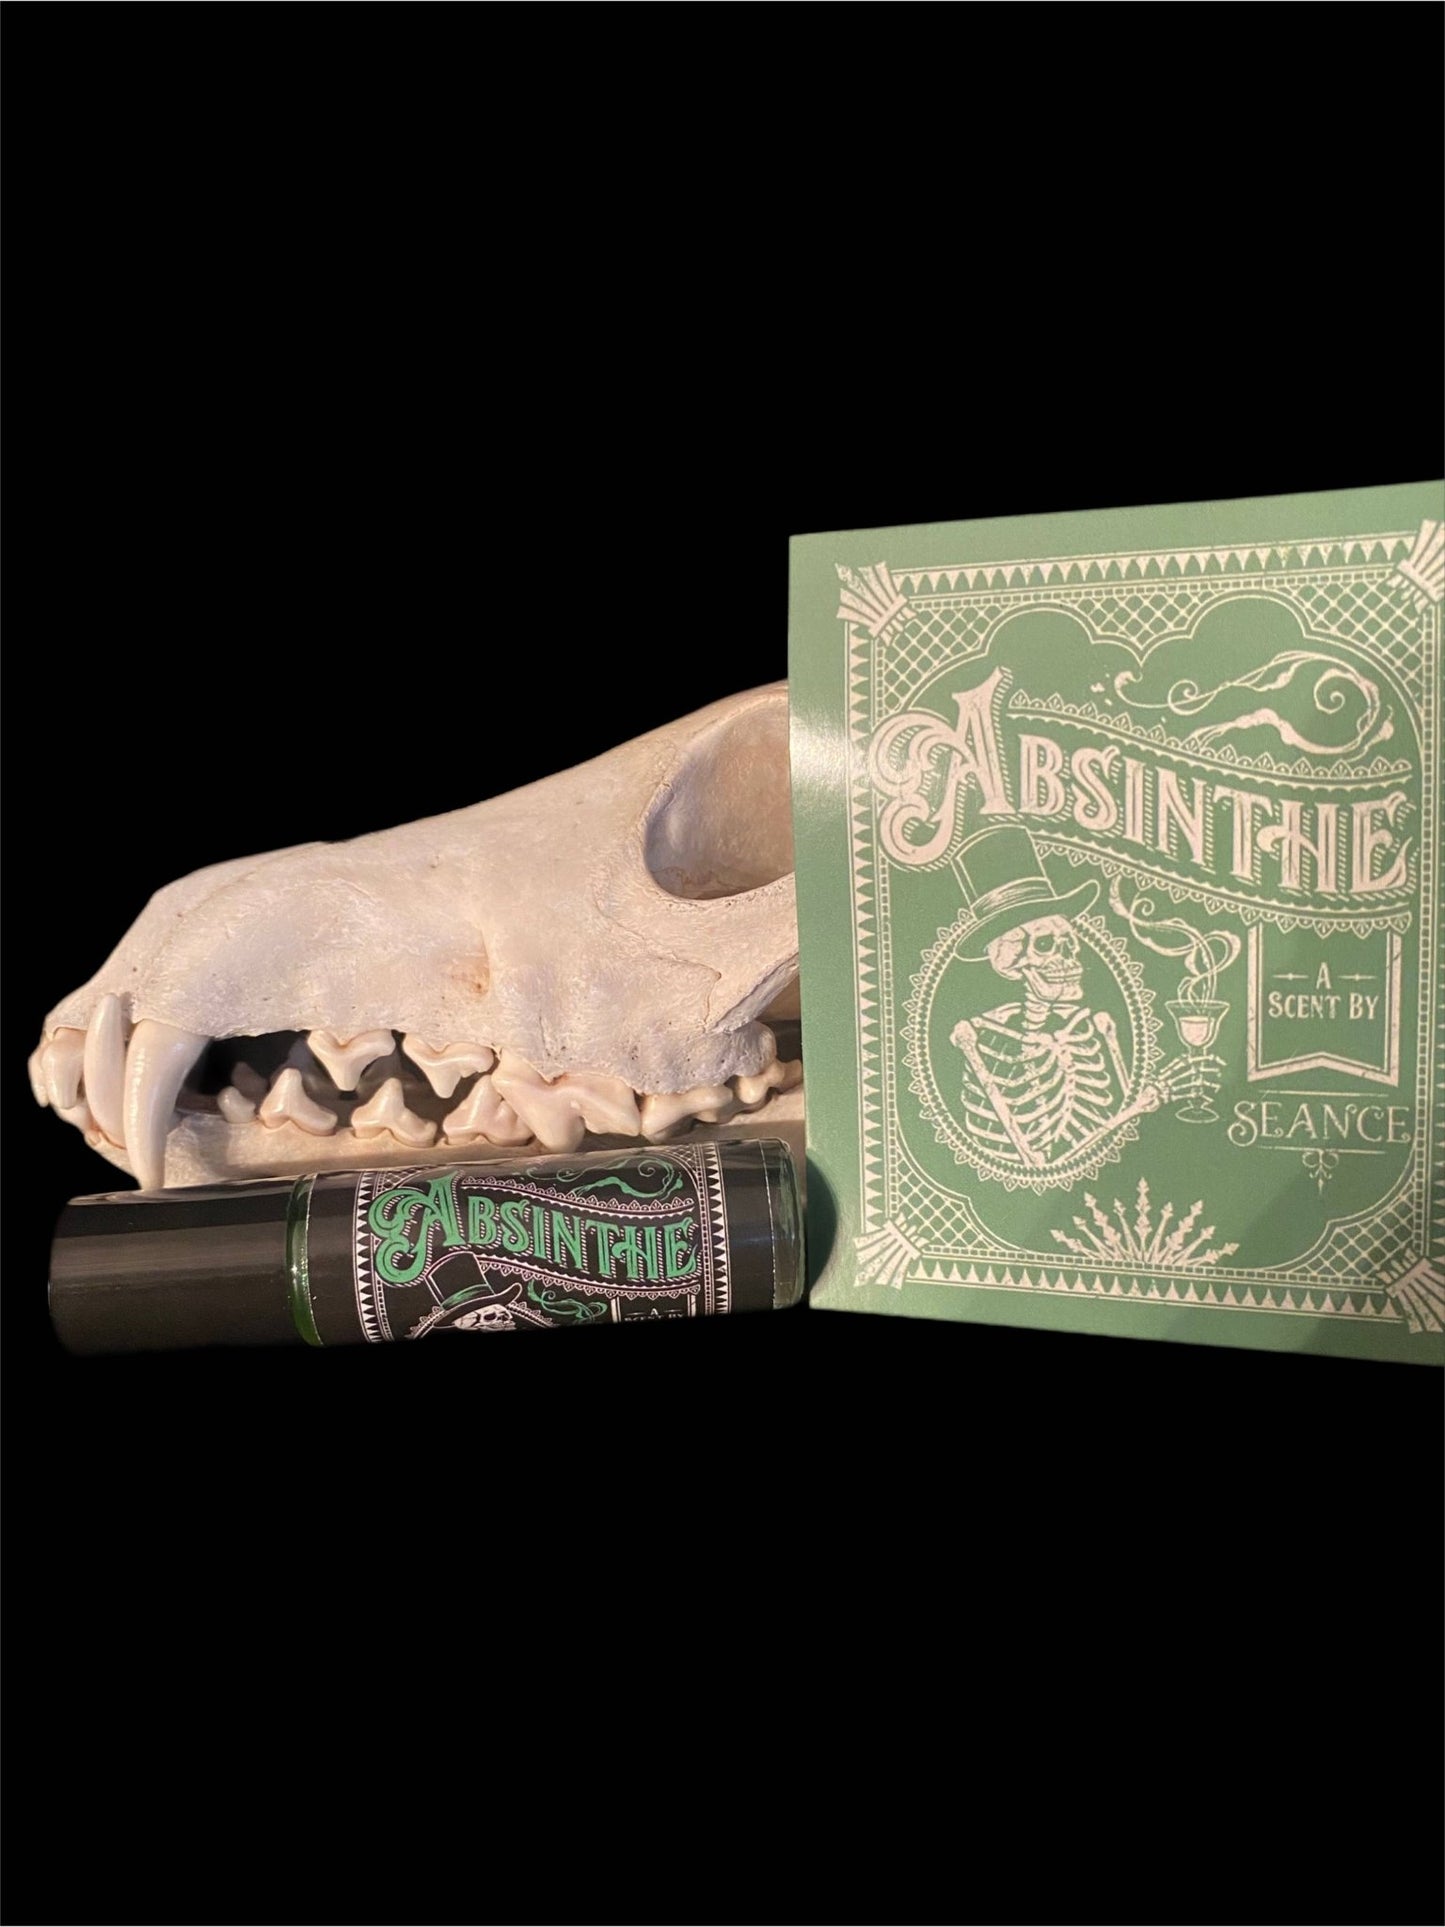 Absinthe - Seance Perfume Roller - Nocturne LLC